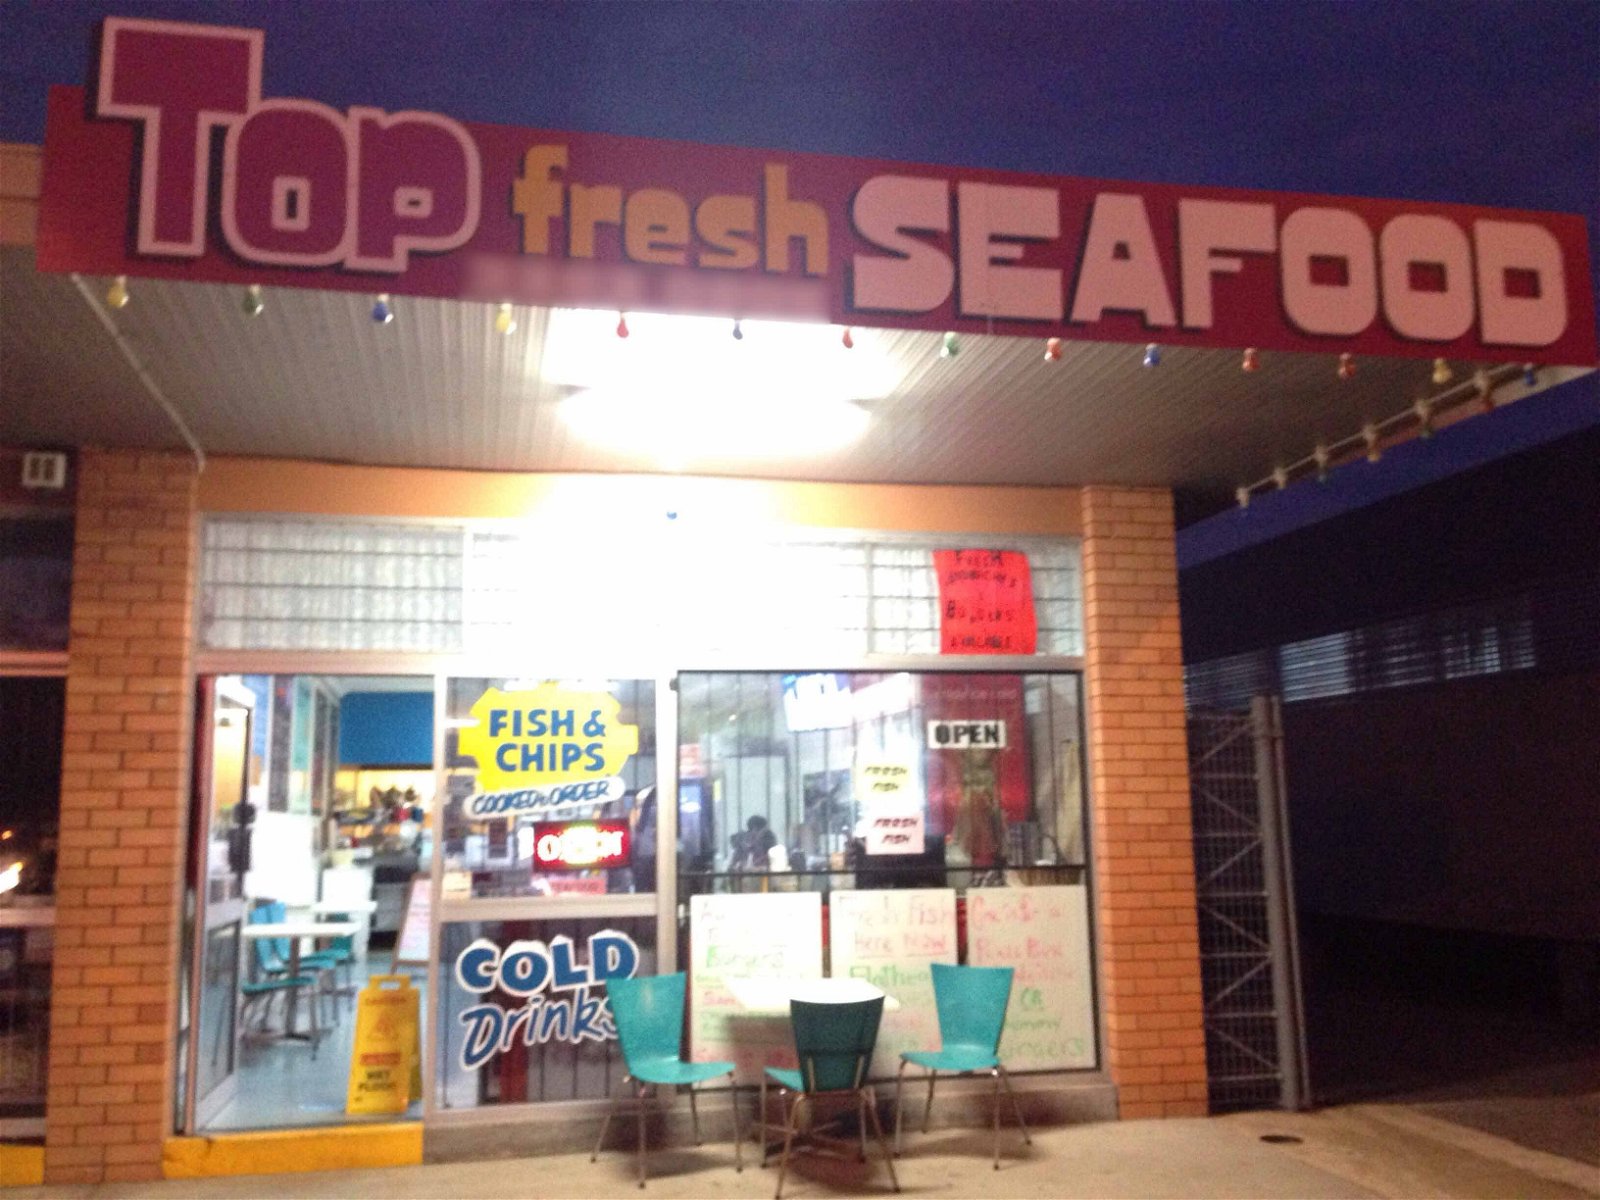 Top Fresh Seafood